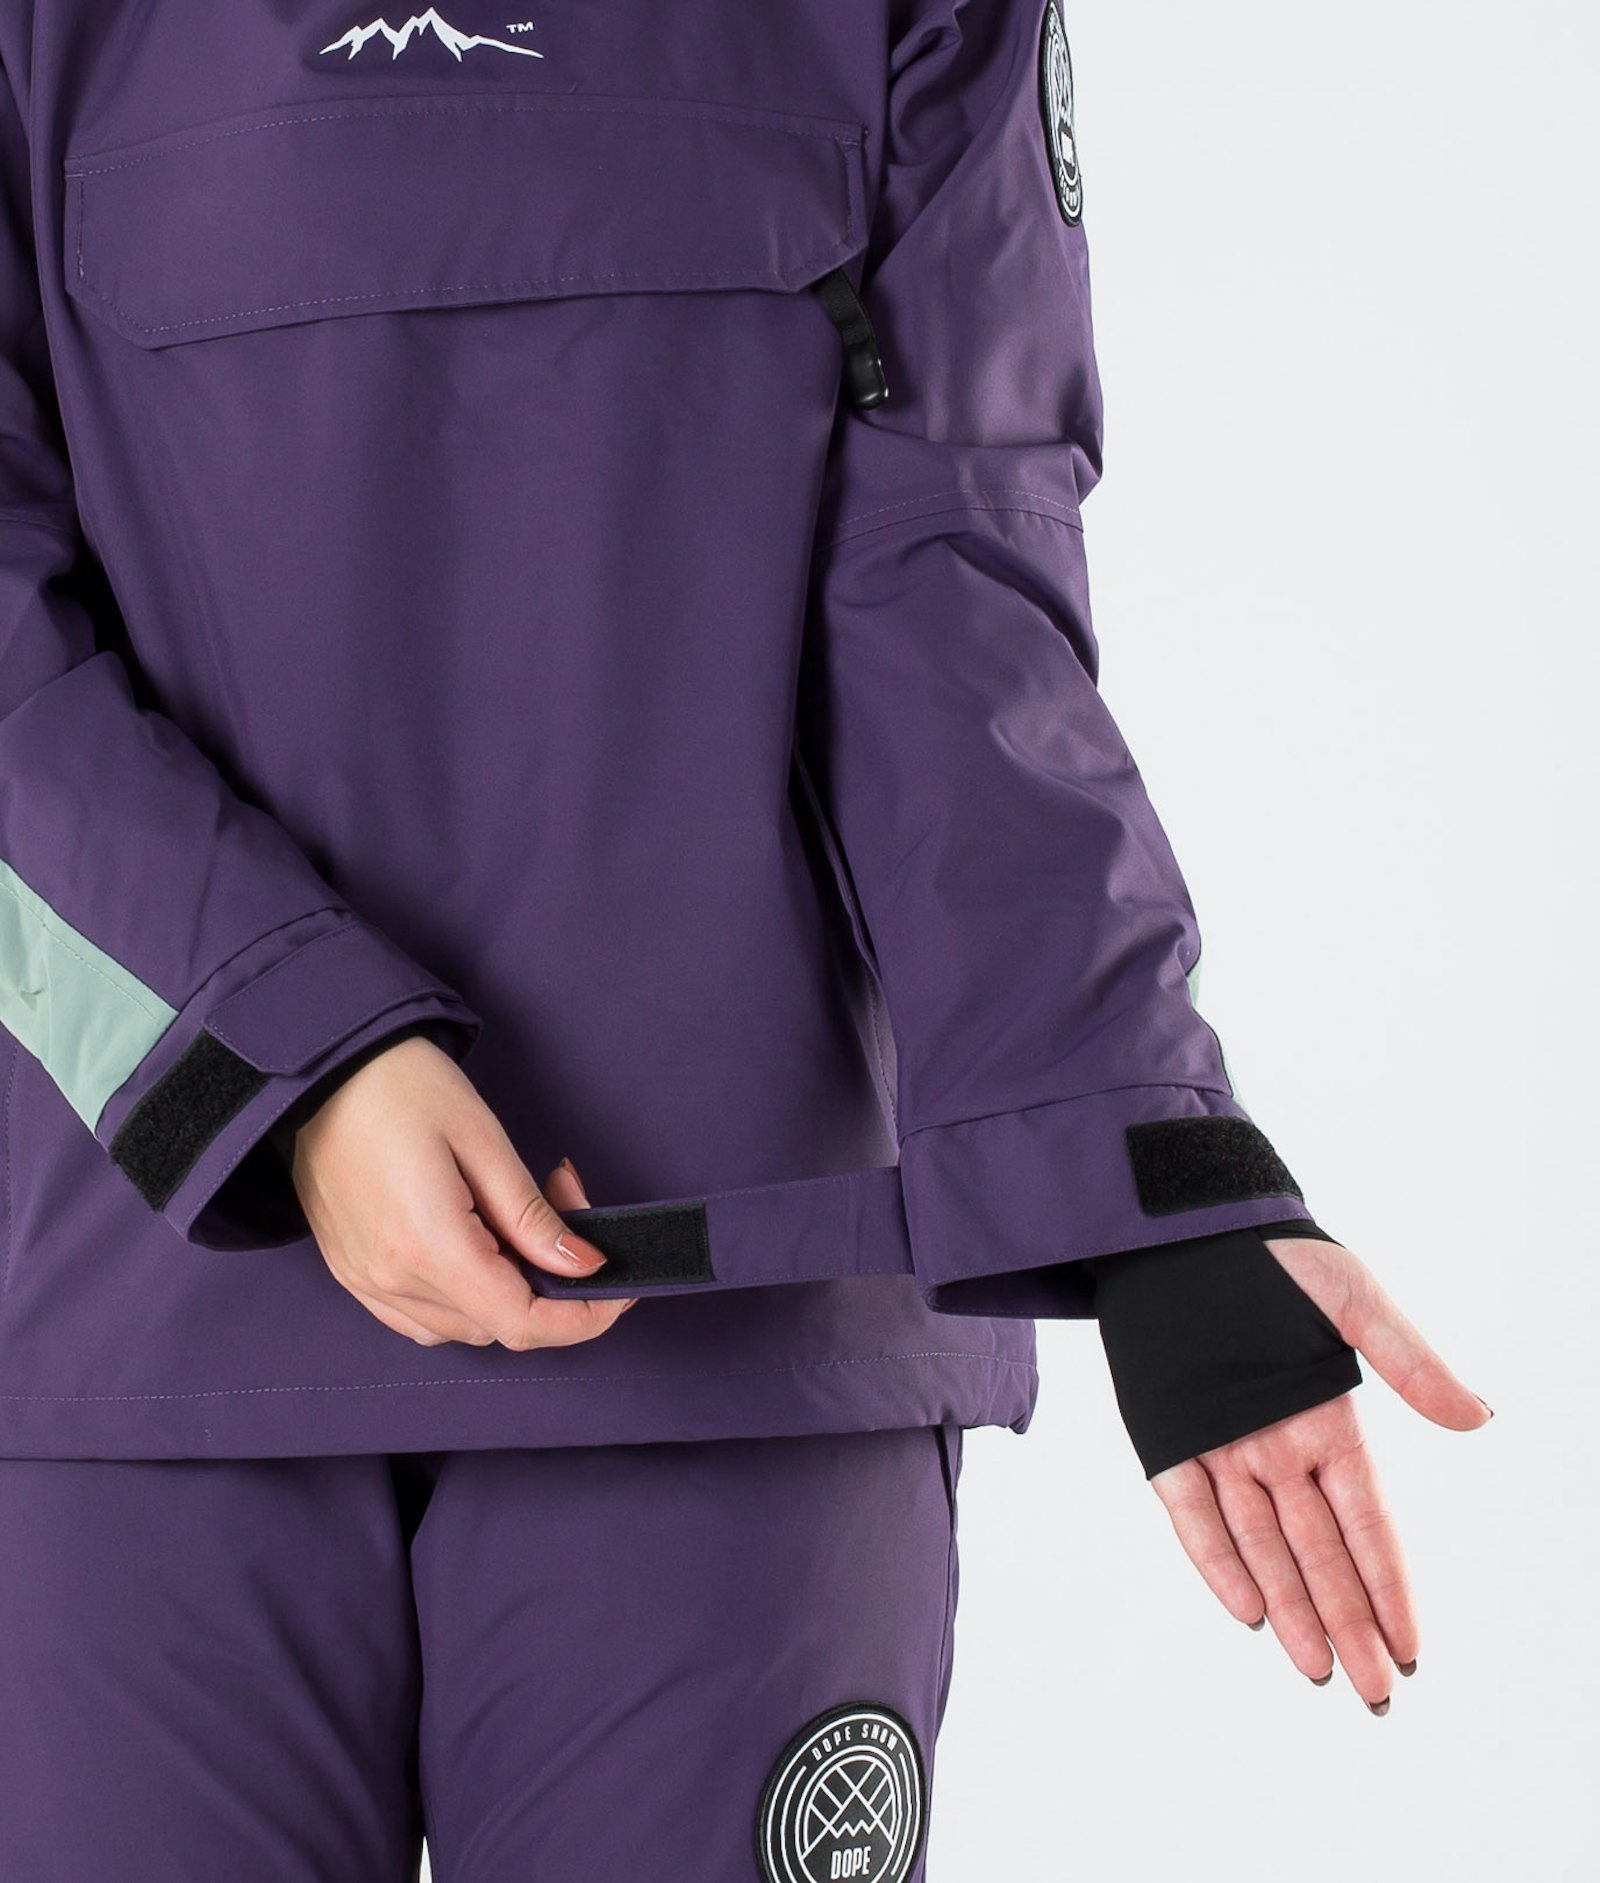 Dope Blizzard W 2019 Snowboard Jacket Women Limited Edition Grape Faded Green